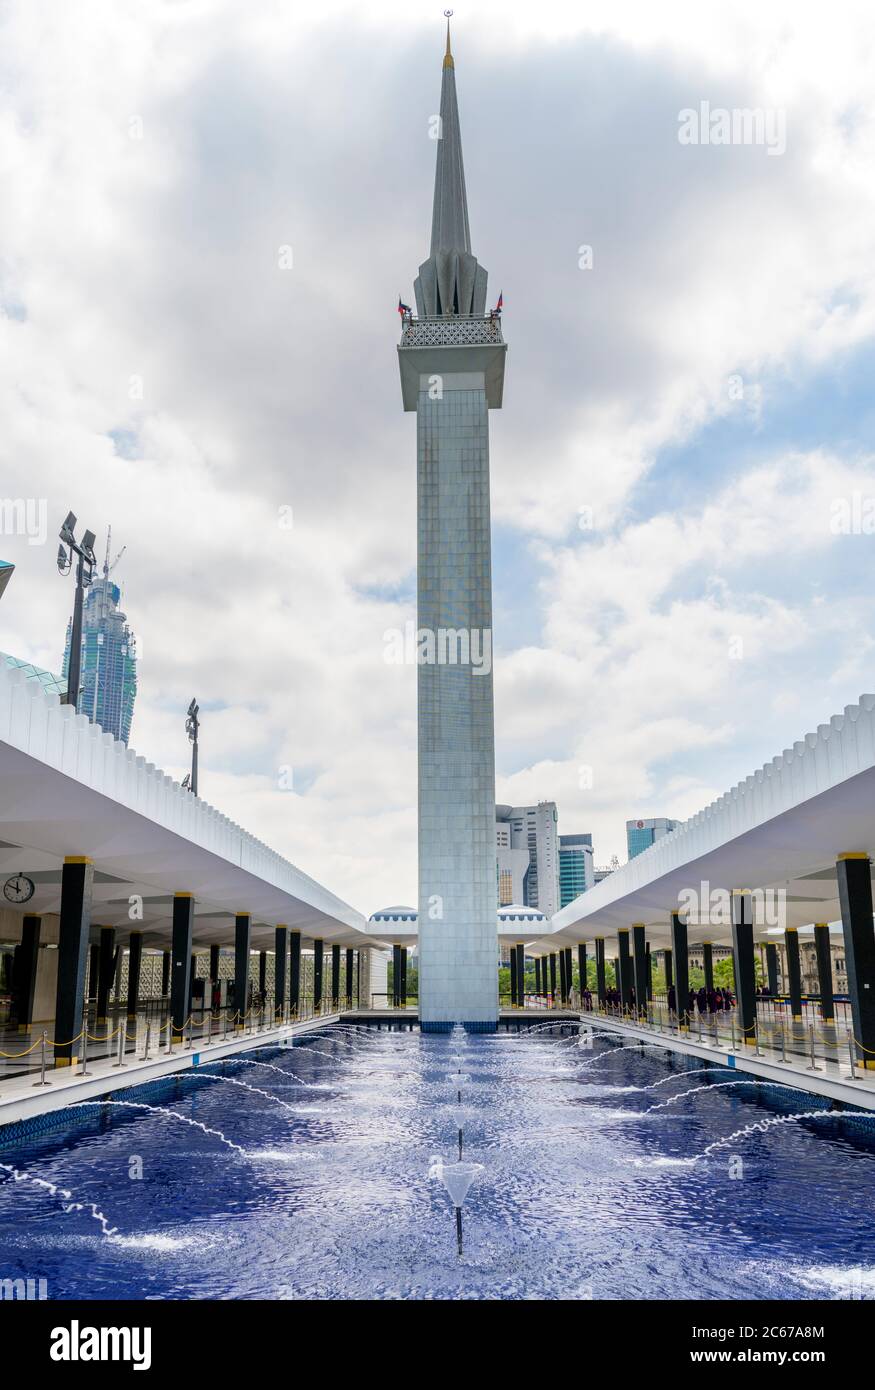 The minaret of the National Mosque of Malaysia (Masjid Negara Malaysia), Kuala Lumpur, Malaysia Stock Photo